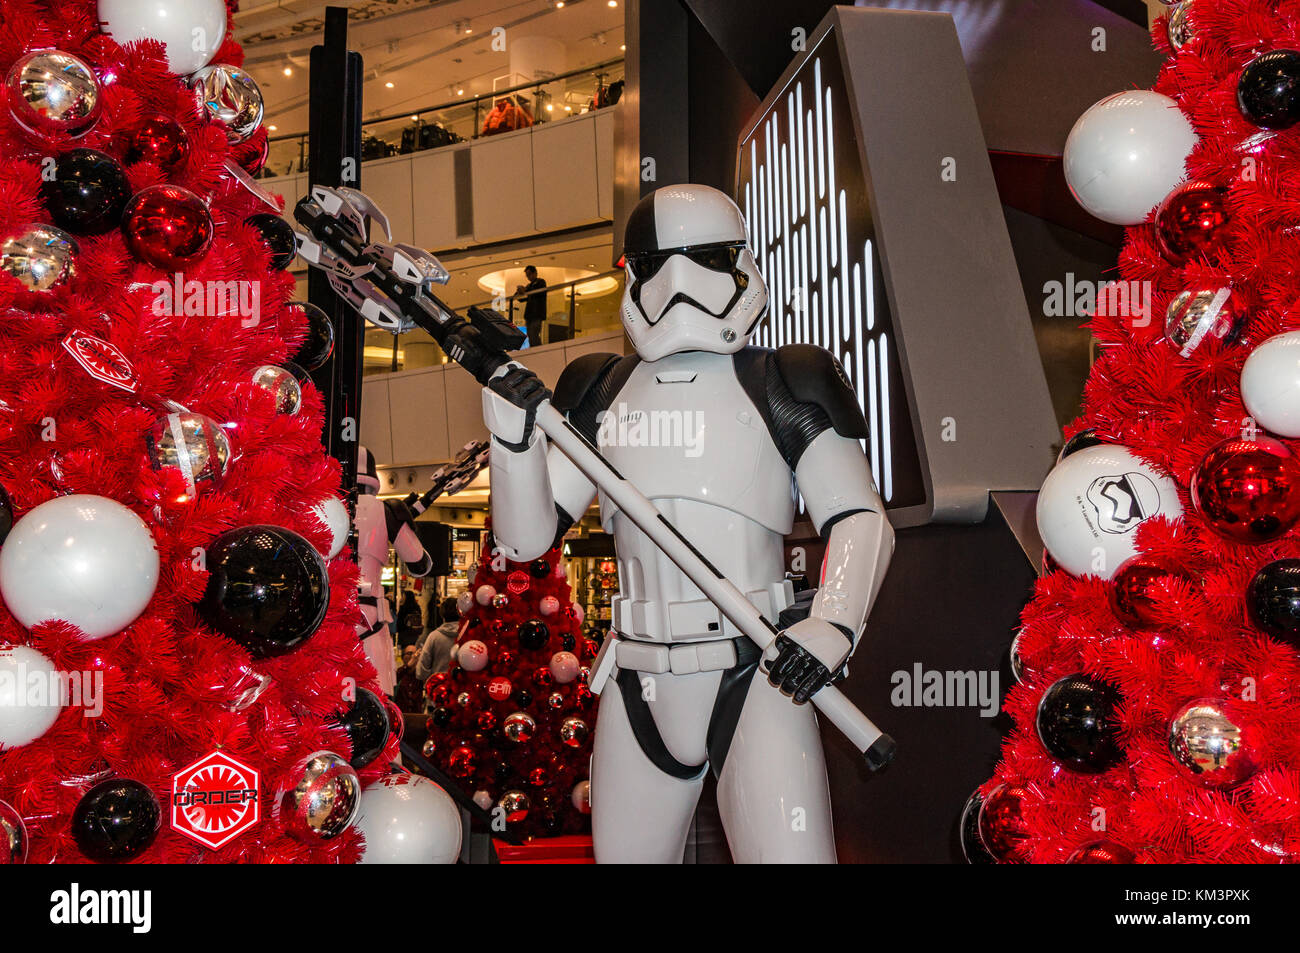 https://c8.alamy.com/comp/KM3PXK/star-wars-theme-christmas-with-lifesize-stormtrooper-KM3PXK.jpg